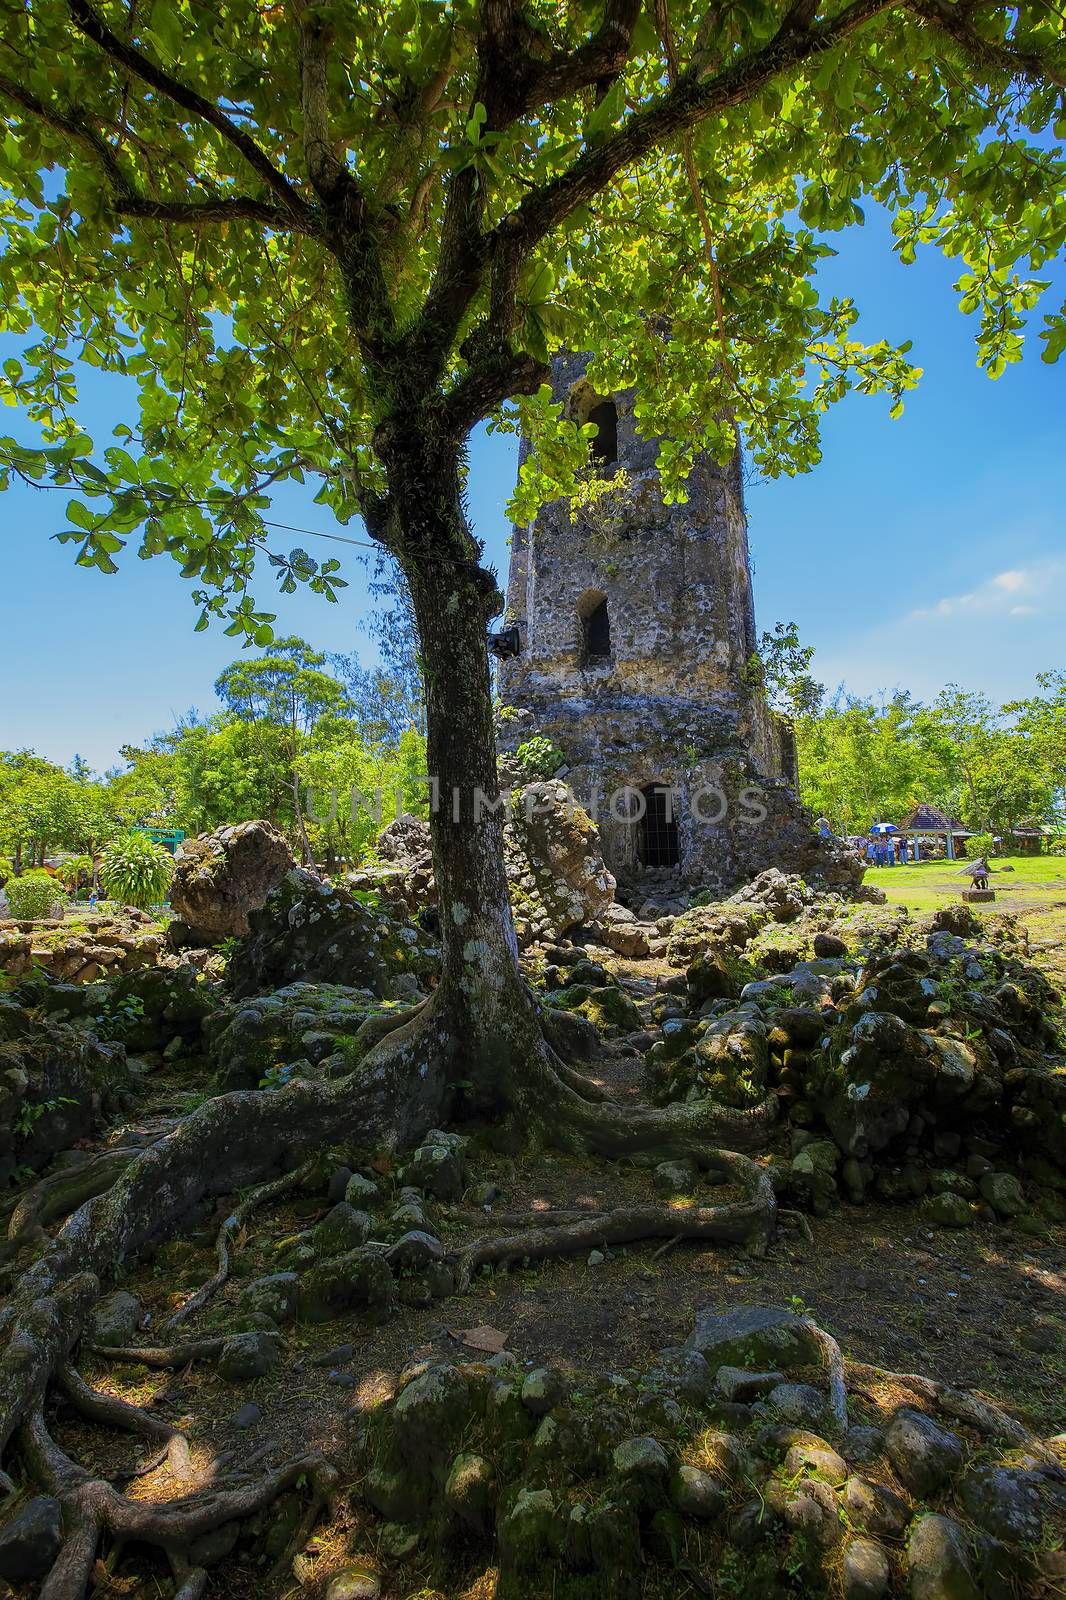 Cagsawa ruins by kjorgen